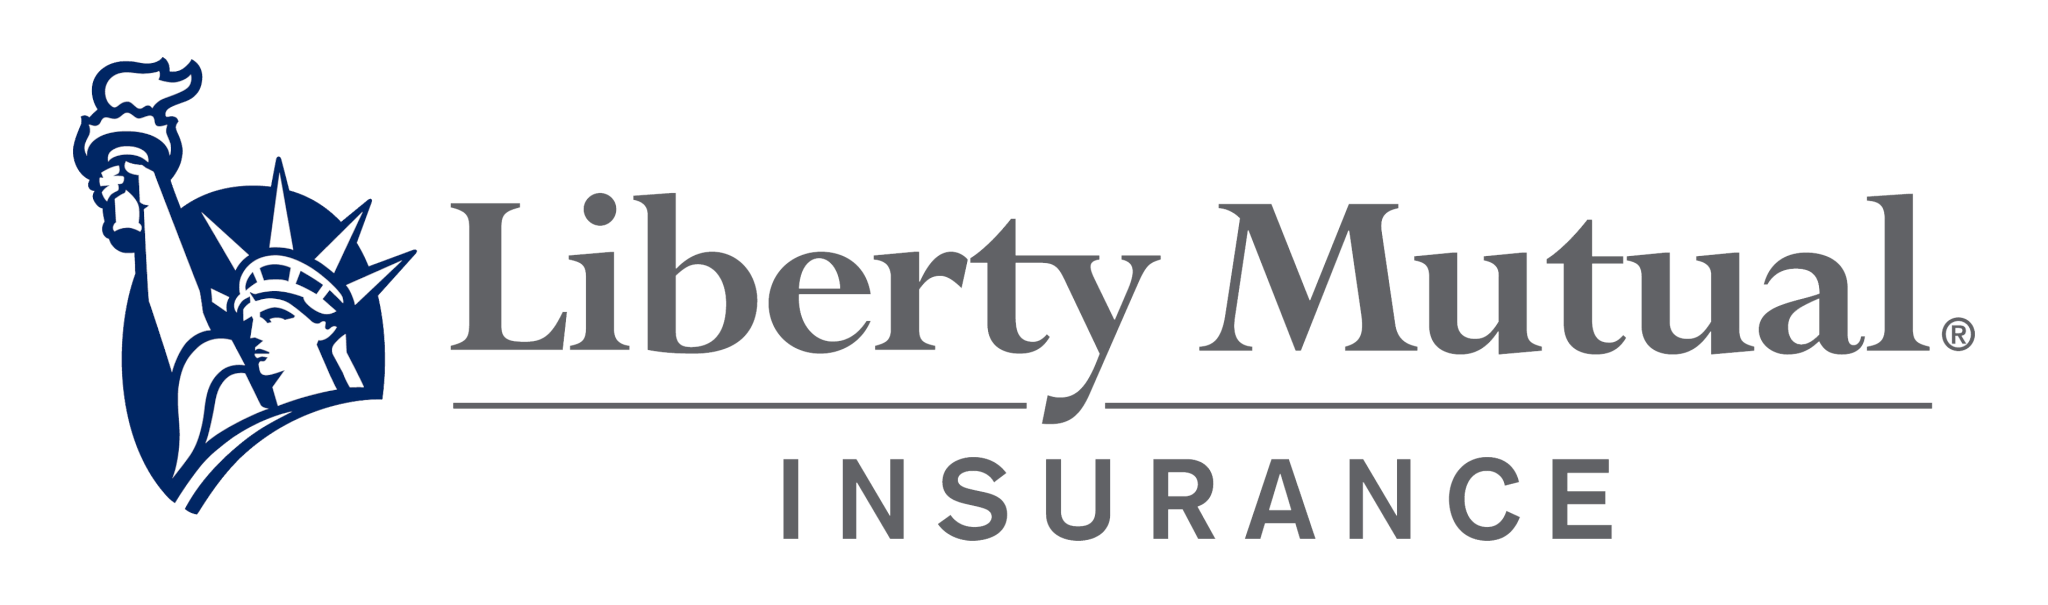 Logo for Liberty Mutual